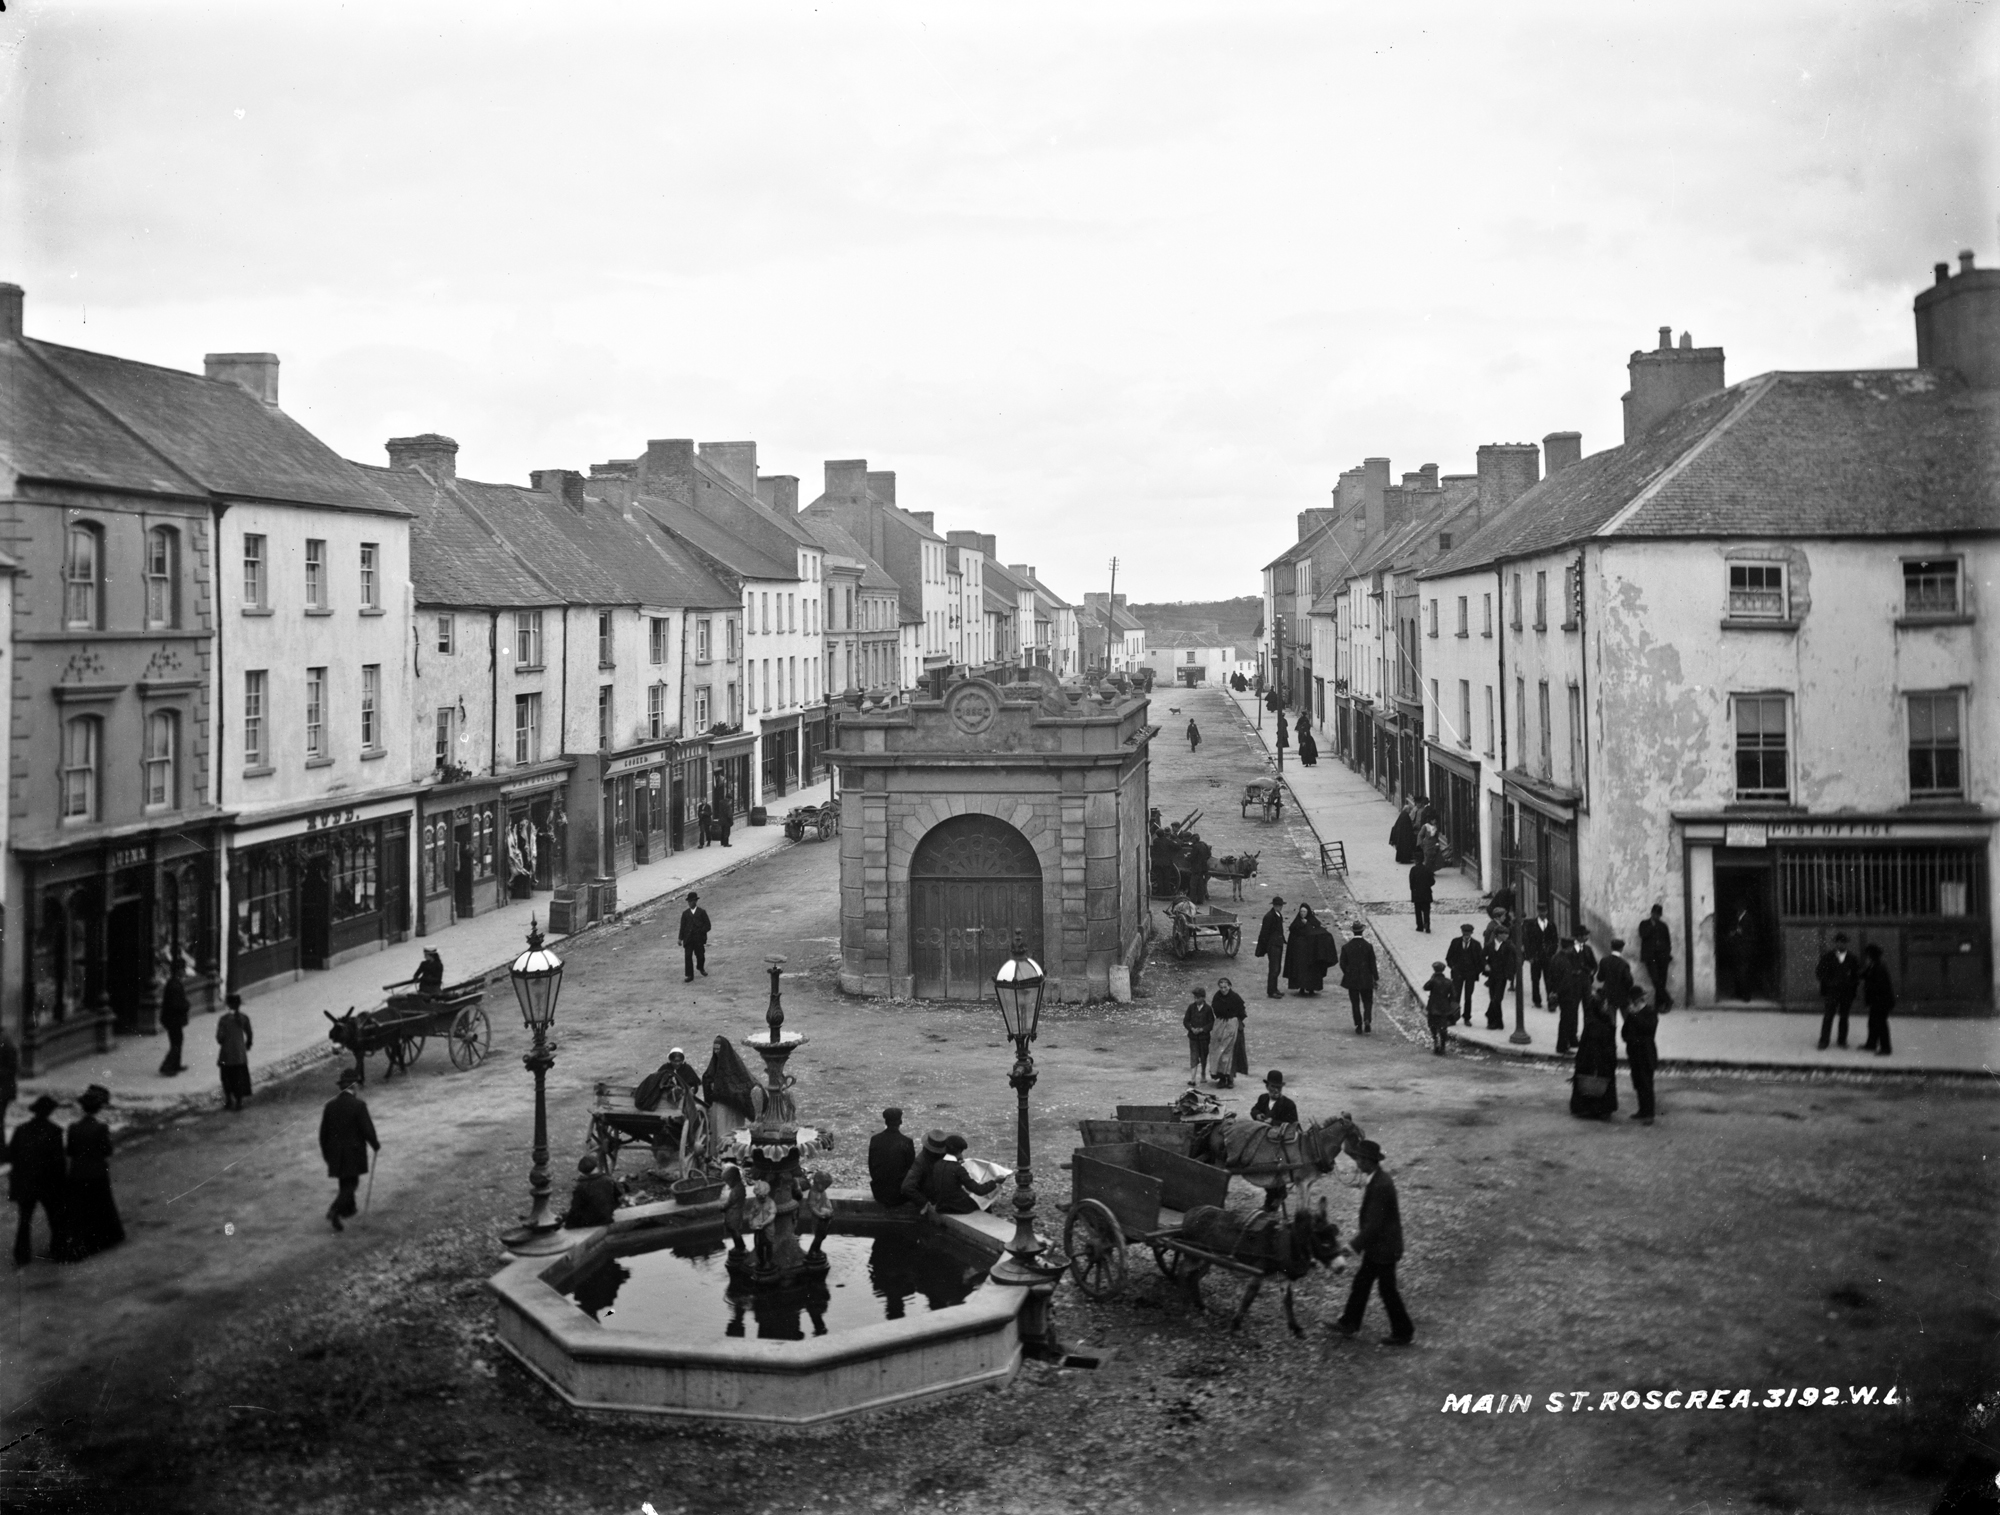 A hive of activity - Main Street, Roscrea, Co. Tipperary